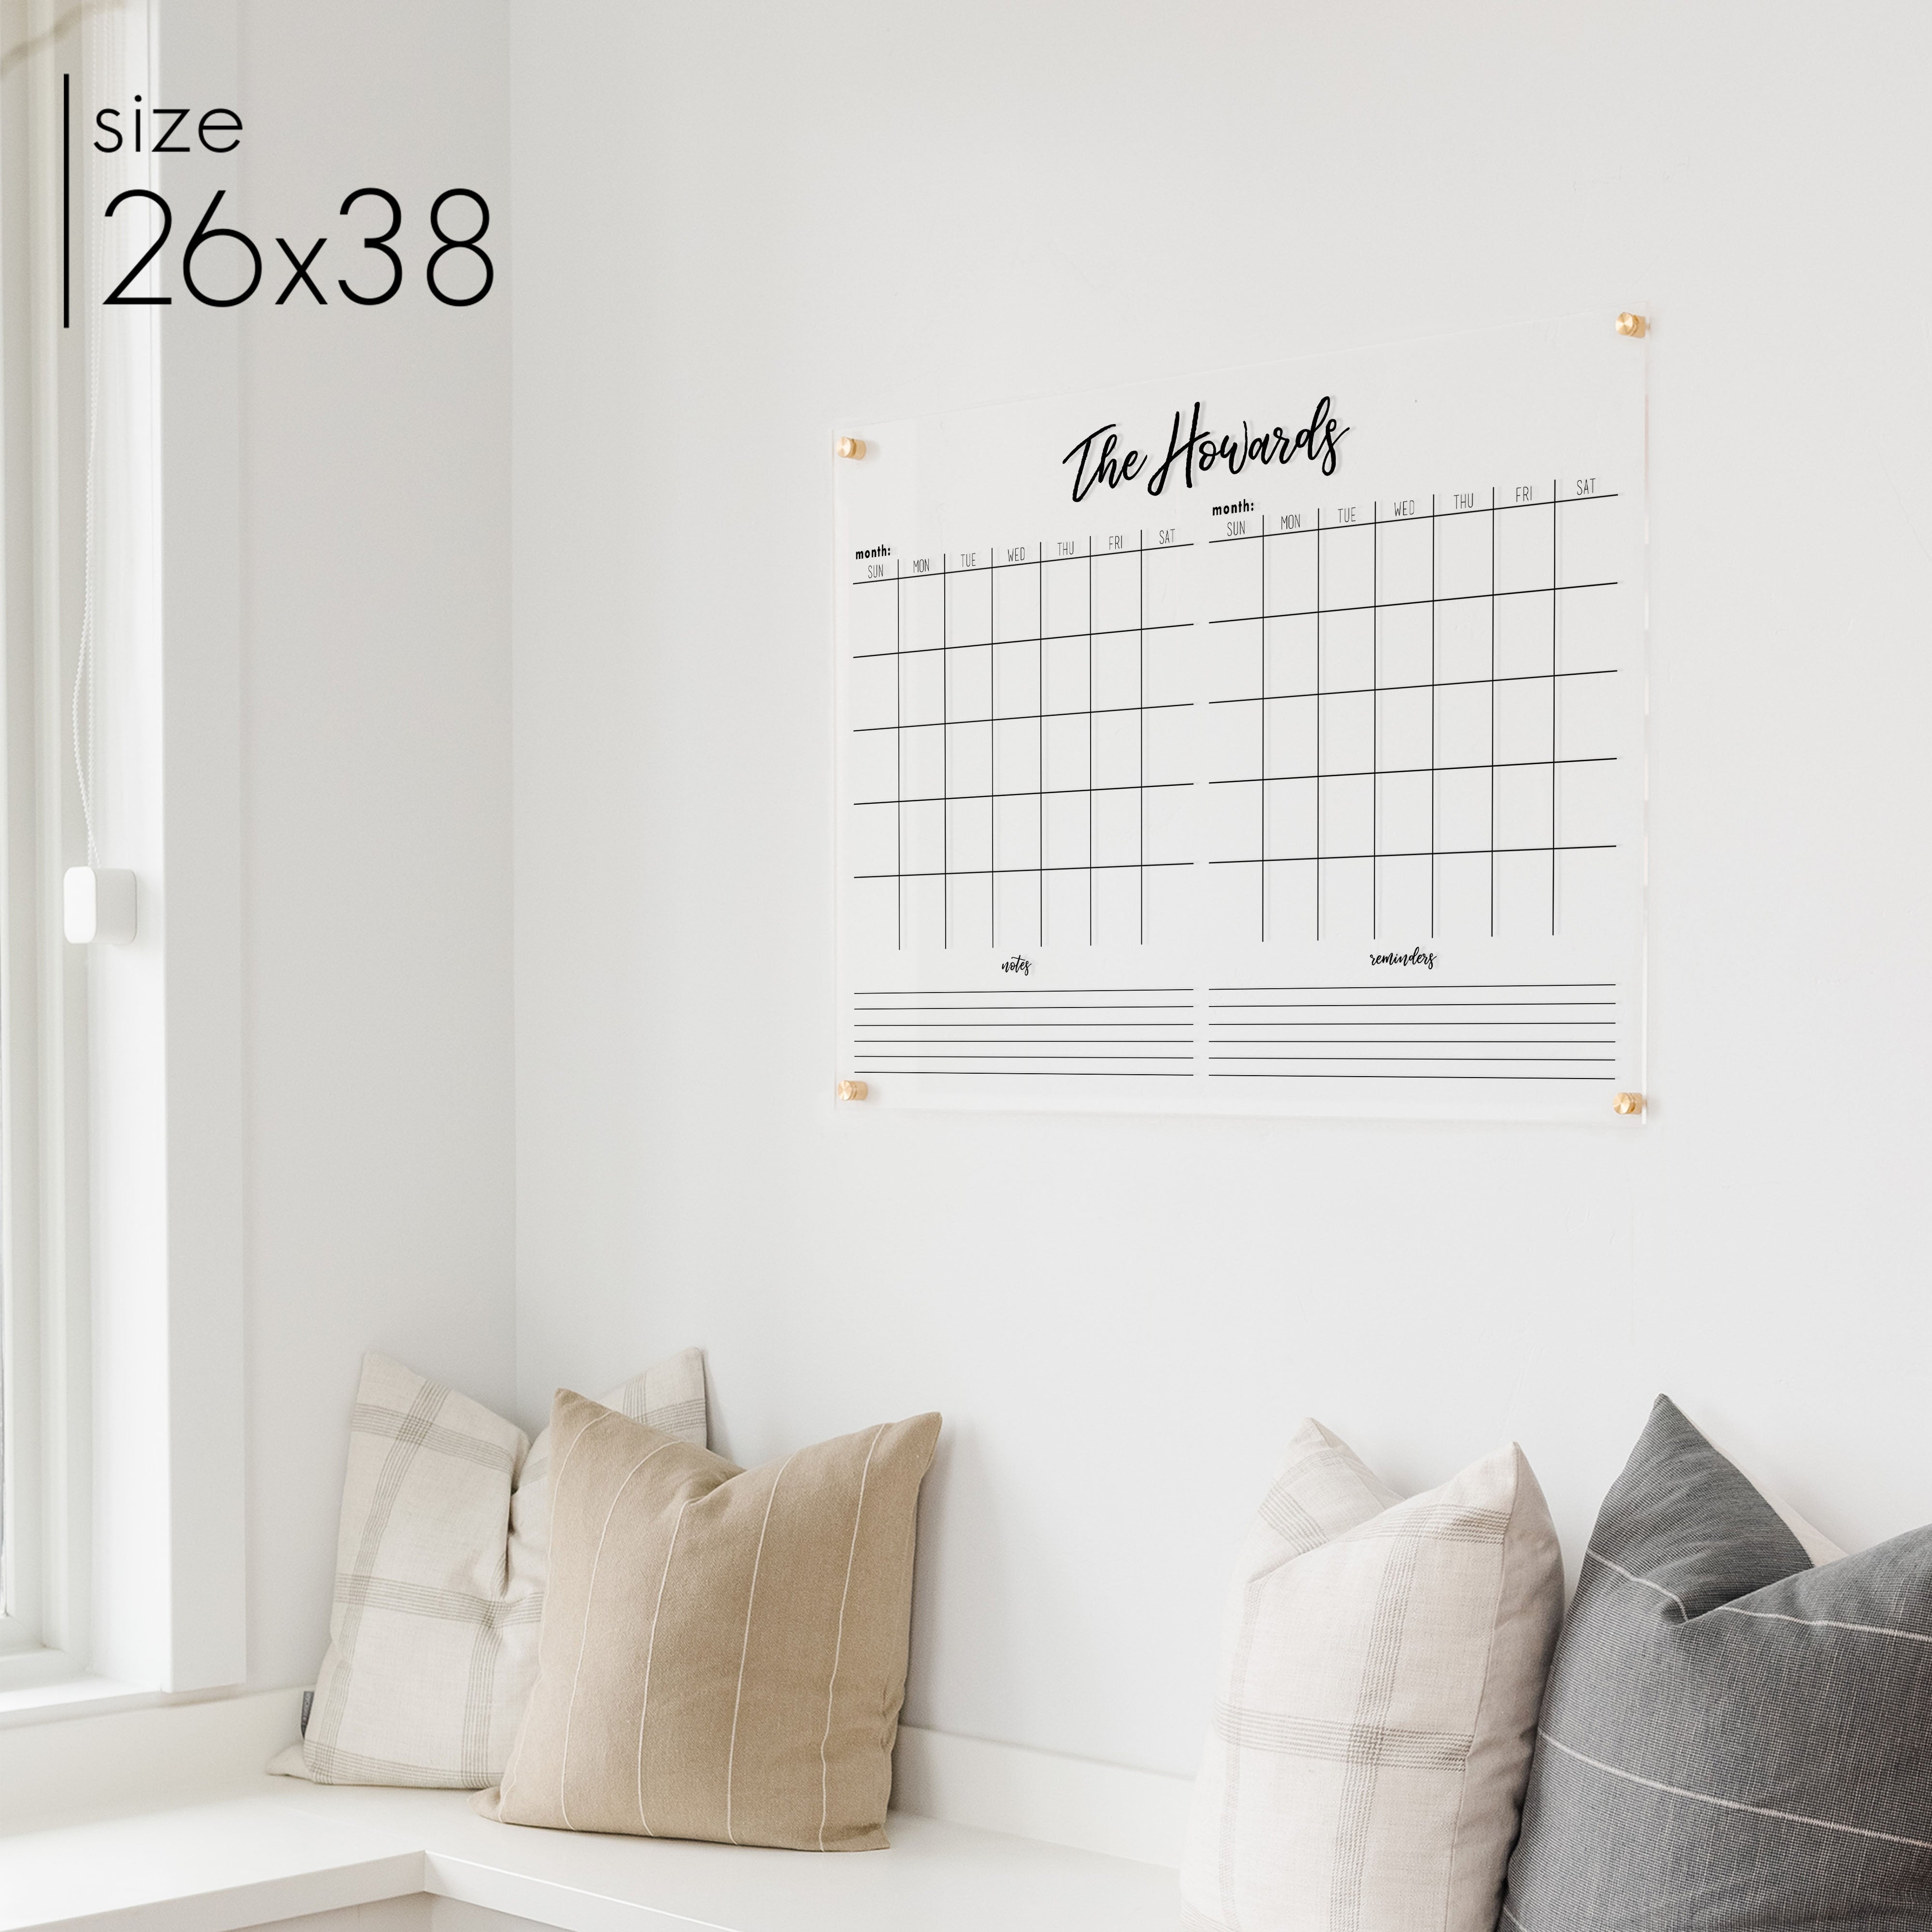 2 Month Acrylic Calendar + 2 Sections | Horizontal Traeger